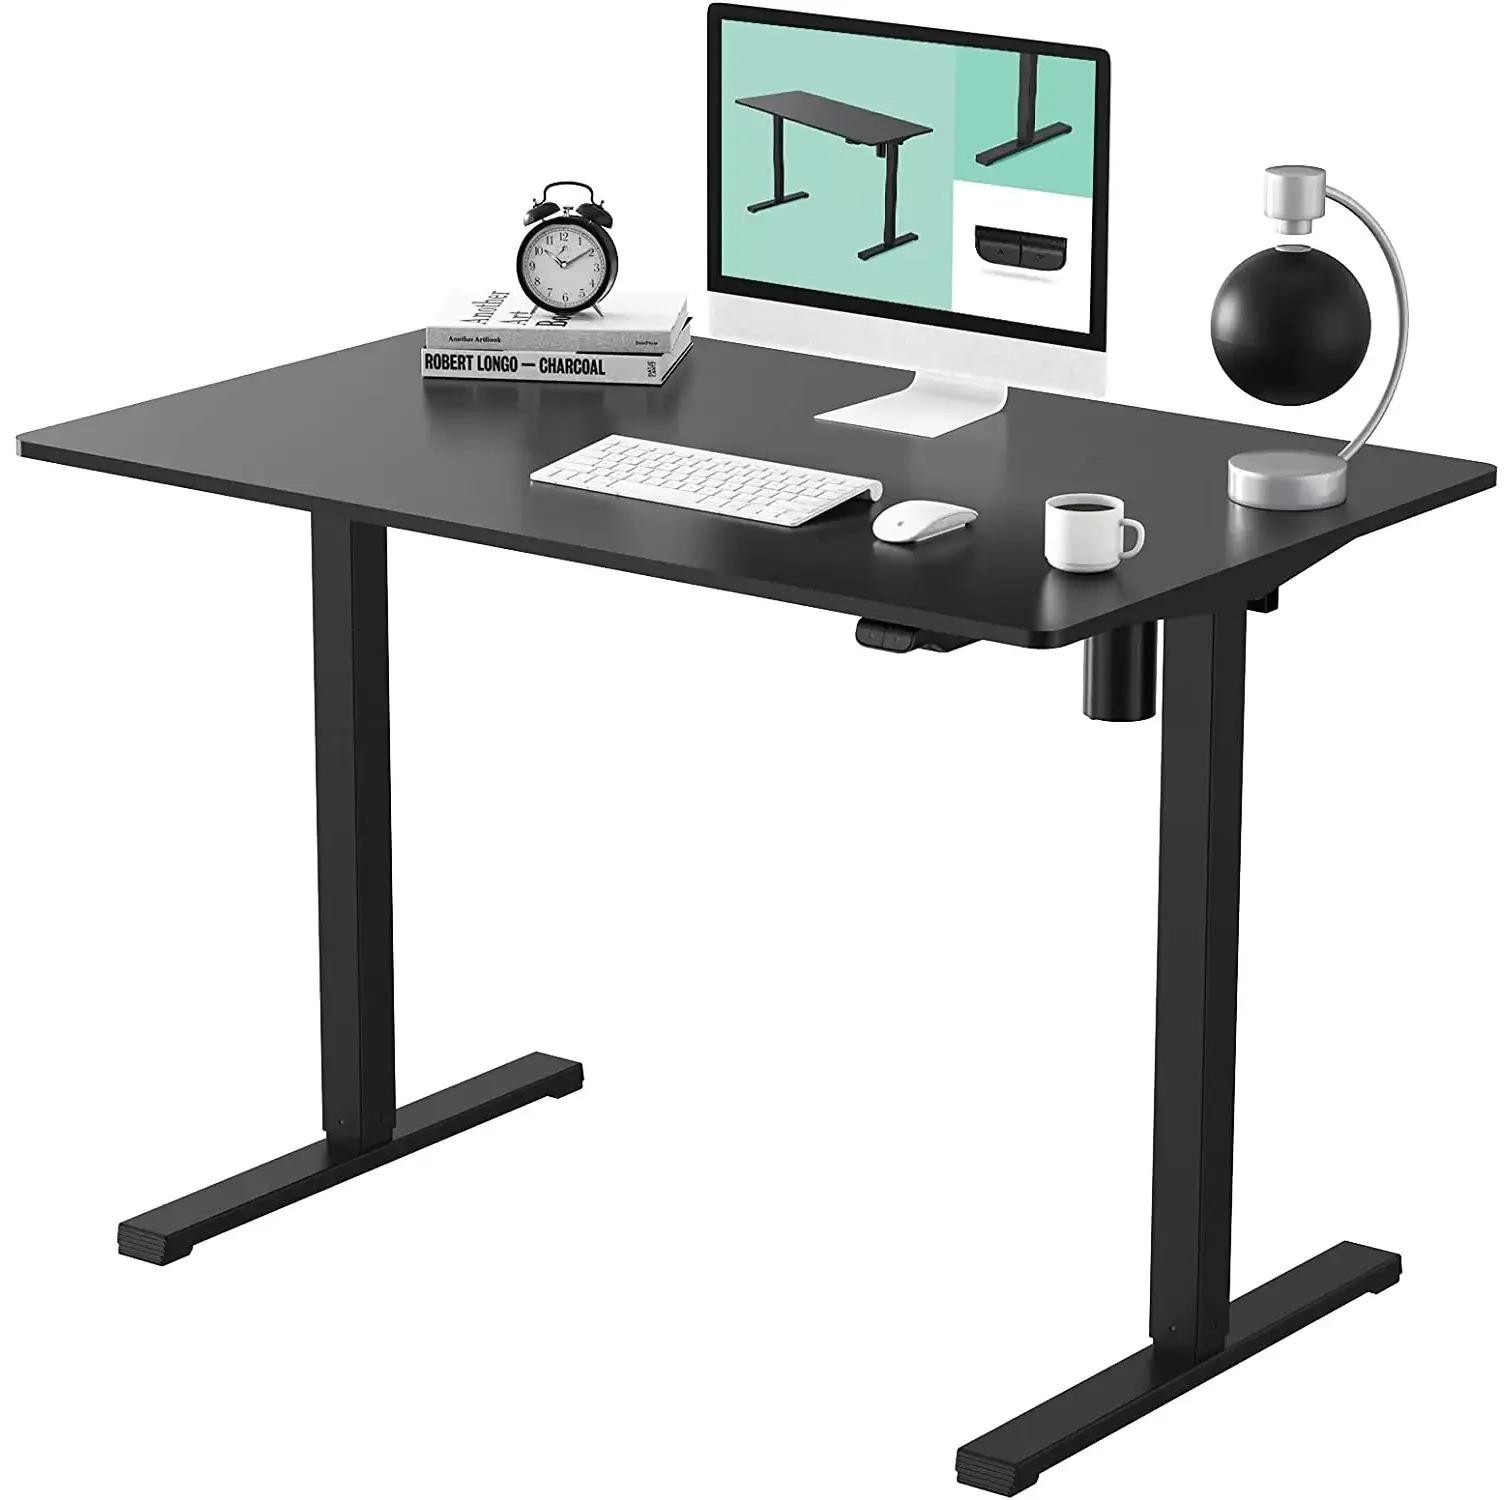 Flexispot 48in Standing Adjustable Desk for $137.49 Shipped